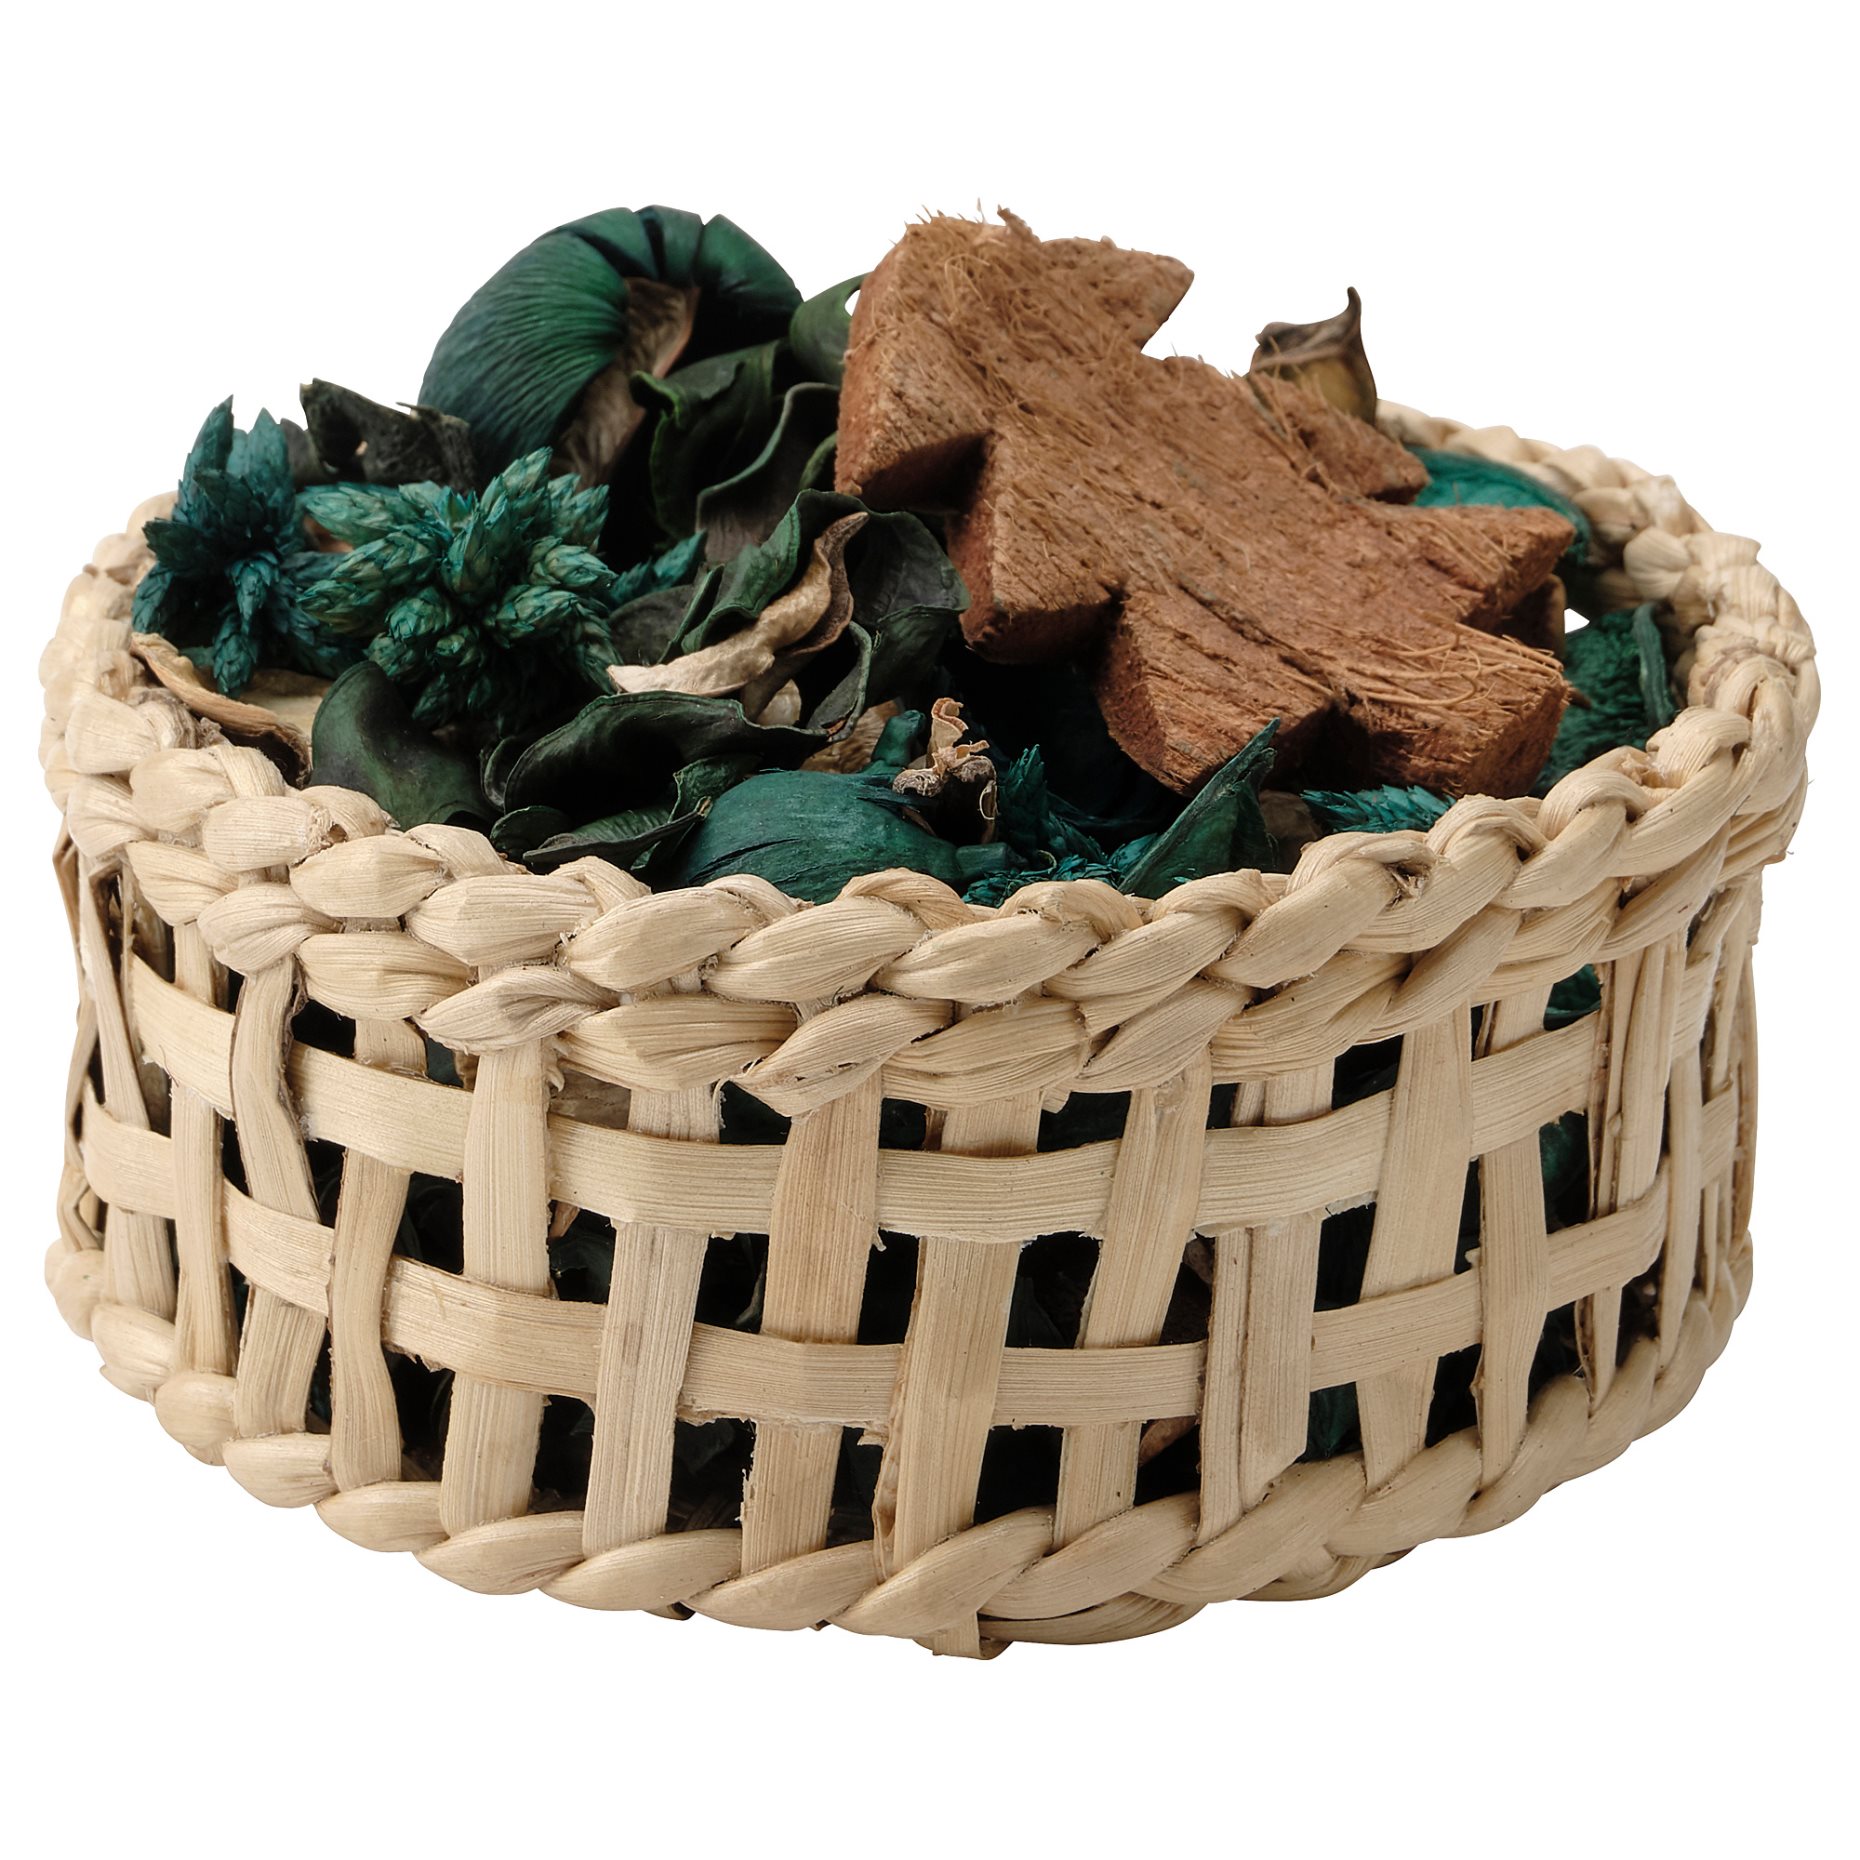 VINTER 2021, basket with potpourri/handmade/Pine needles and moss, 13 cm, 205.041.46